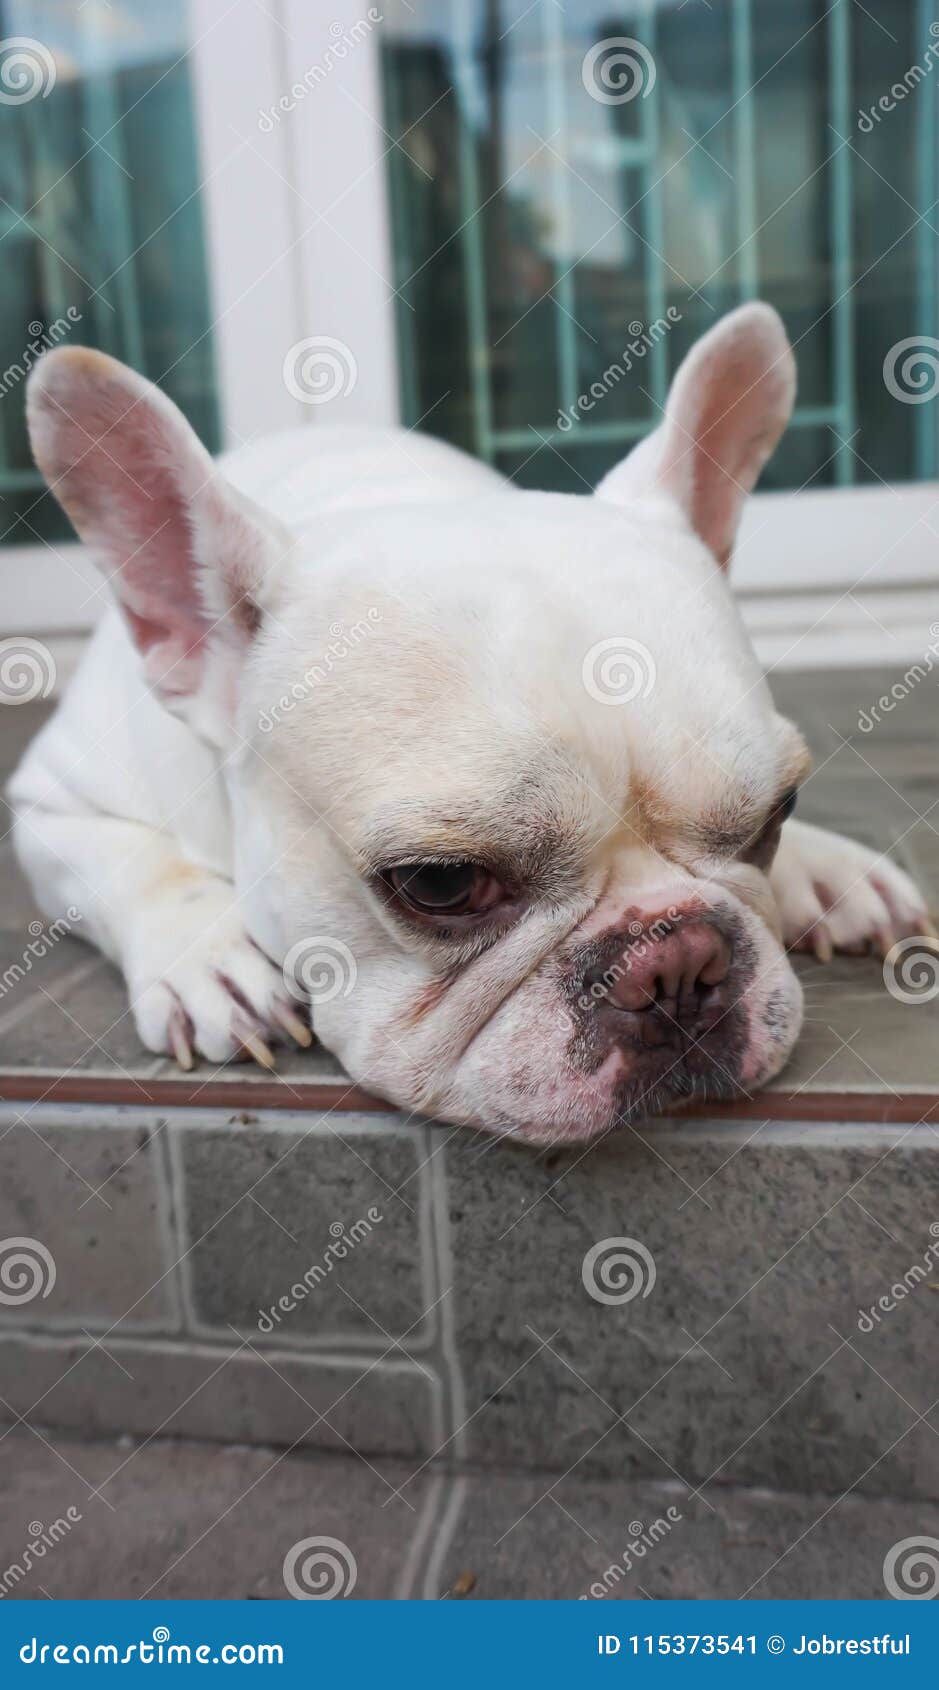 Tame French Bulldog or Sleepy Dog Stock Image - Image of grovel, kowtow ...